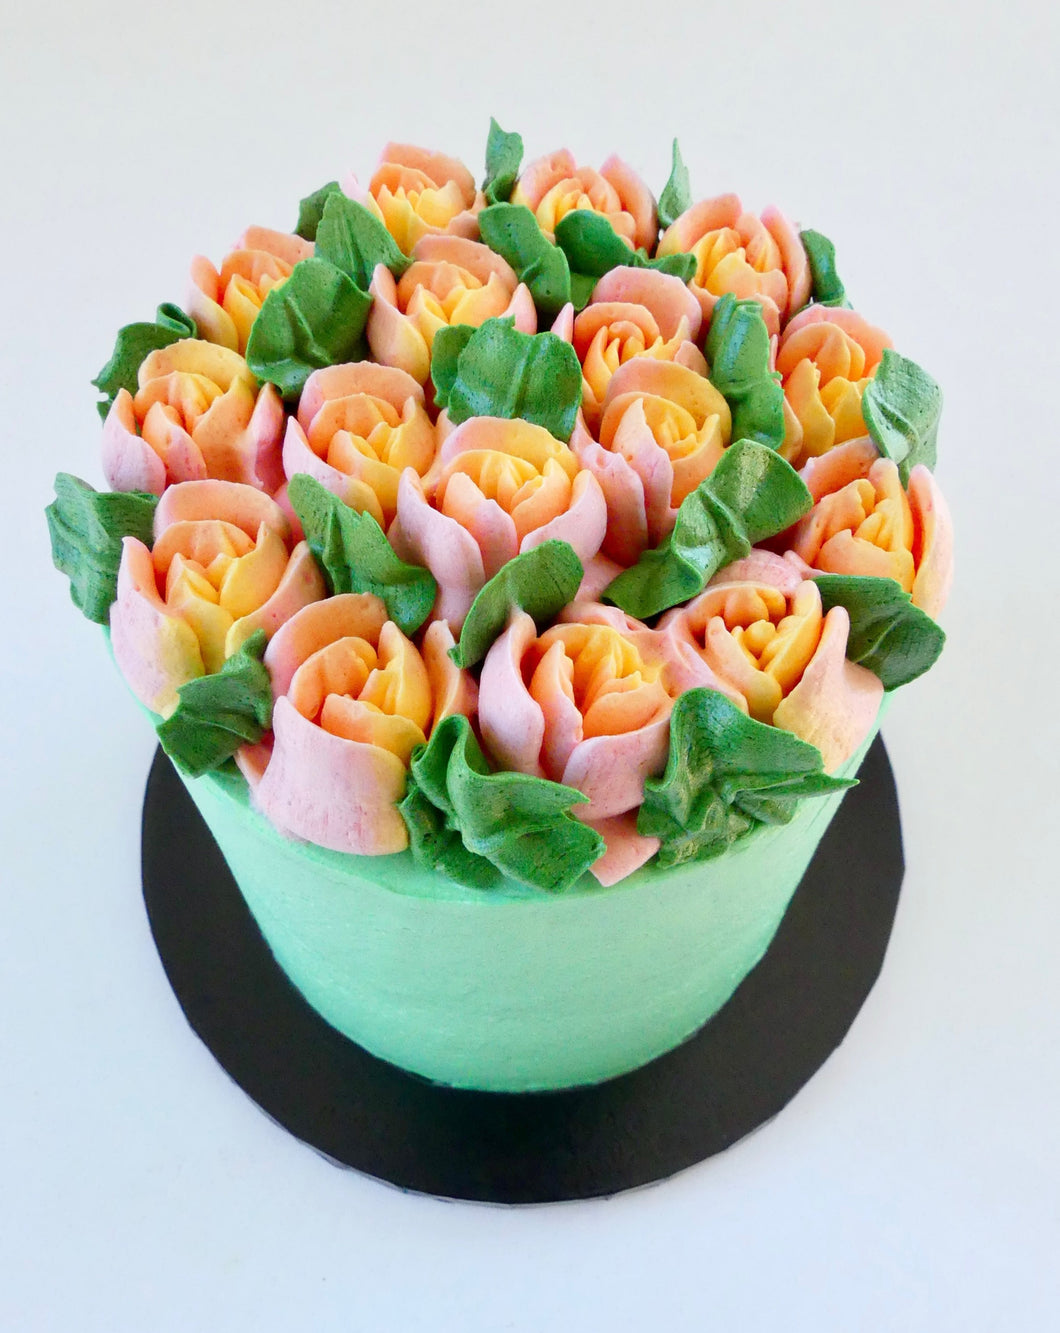 Mini Floral Cake